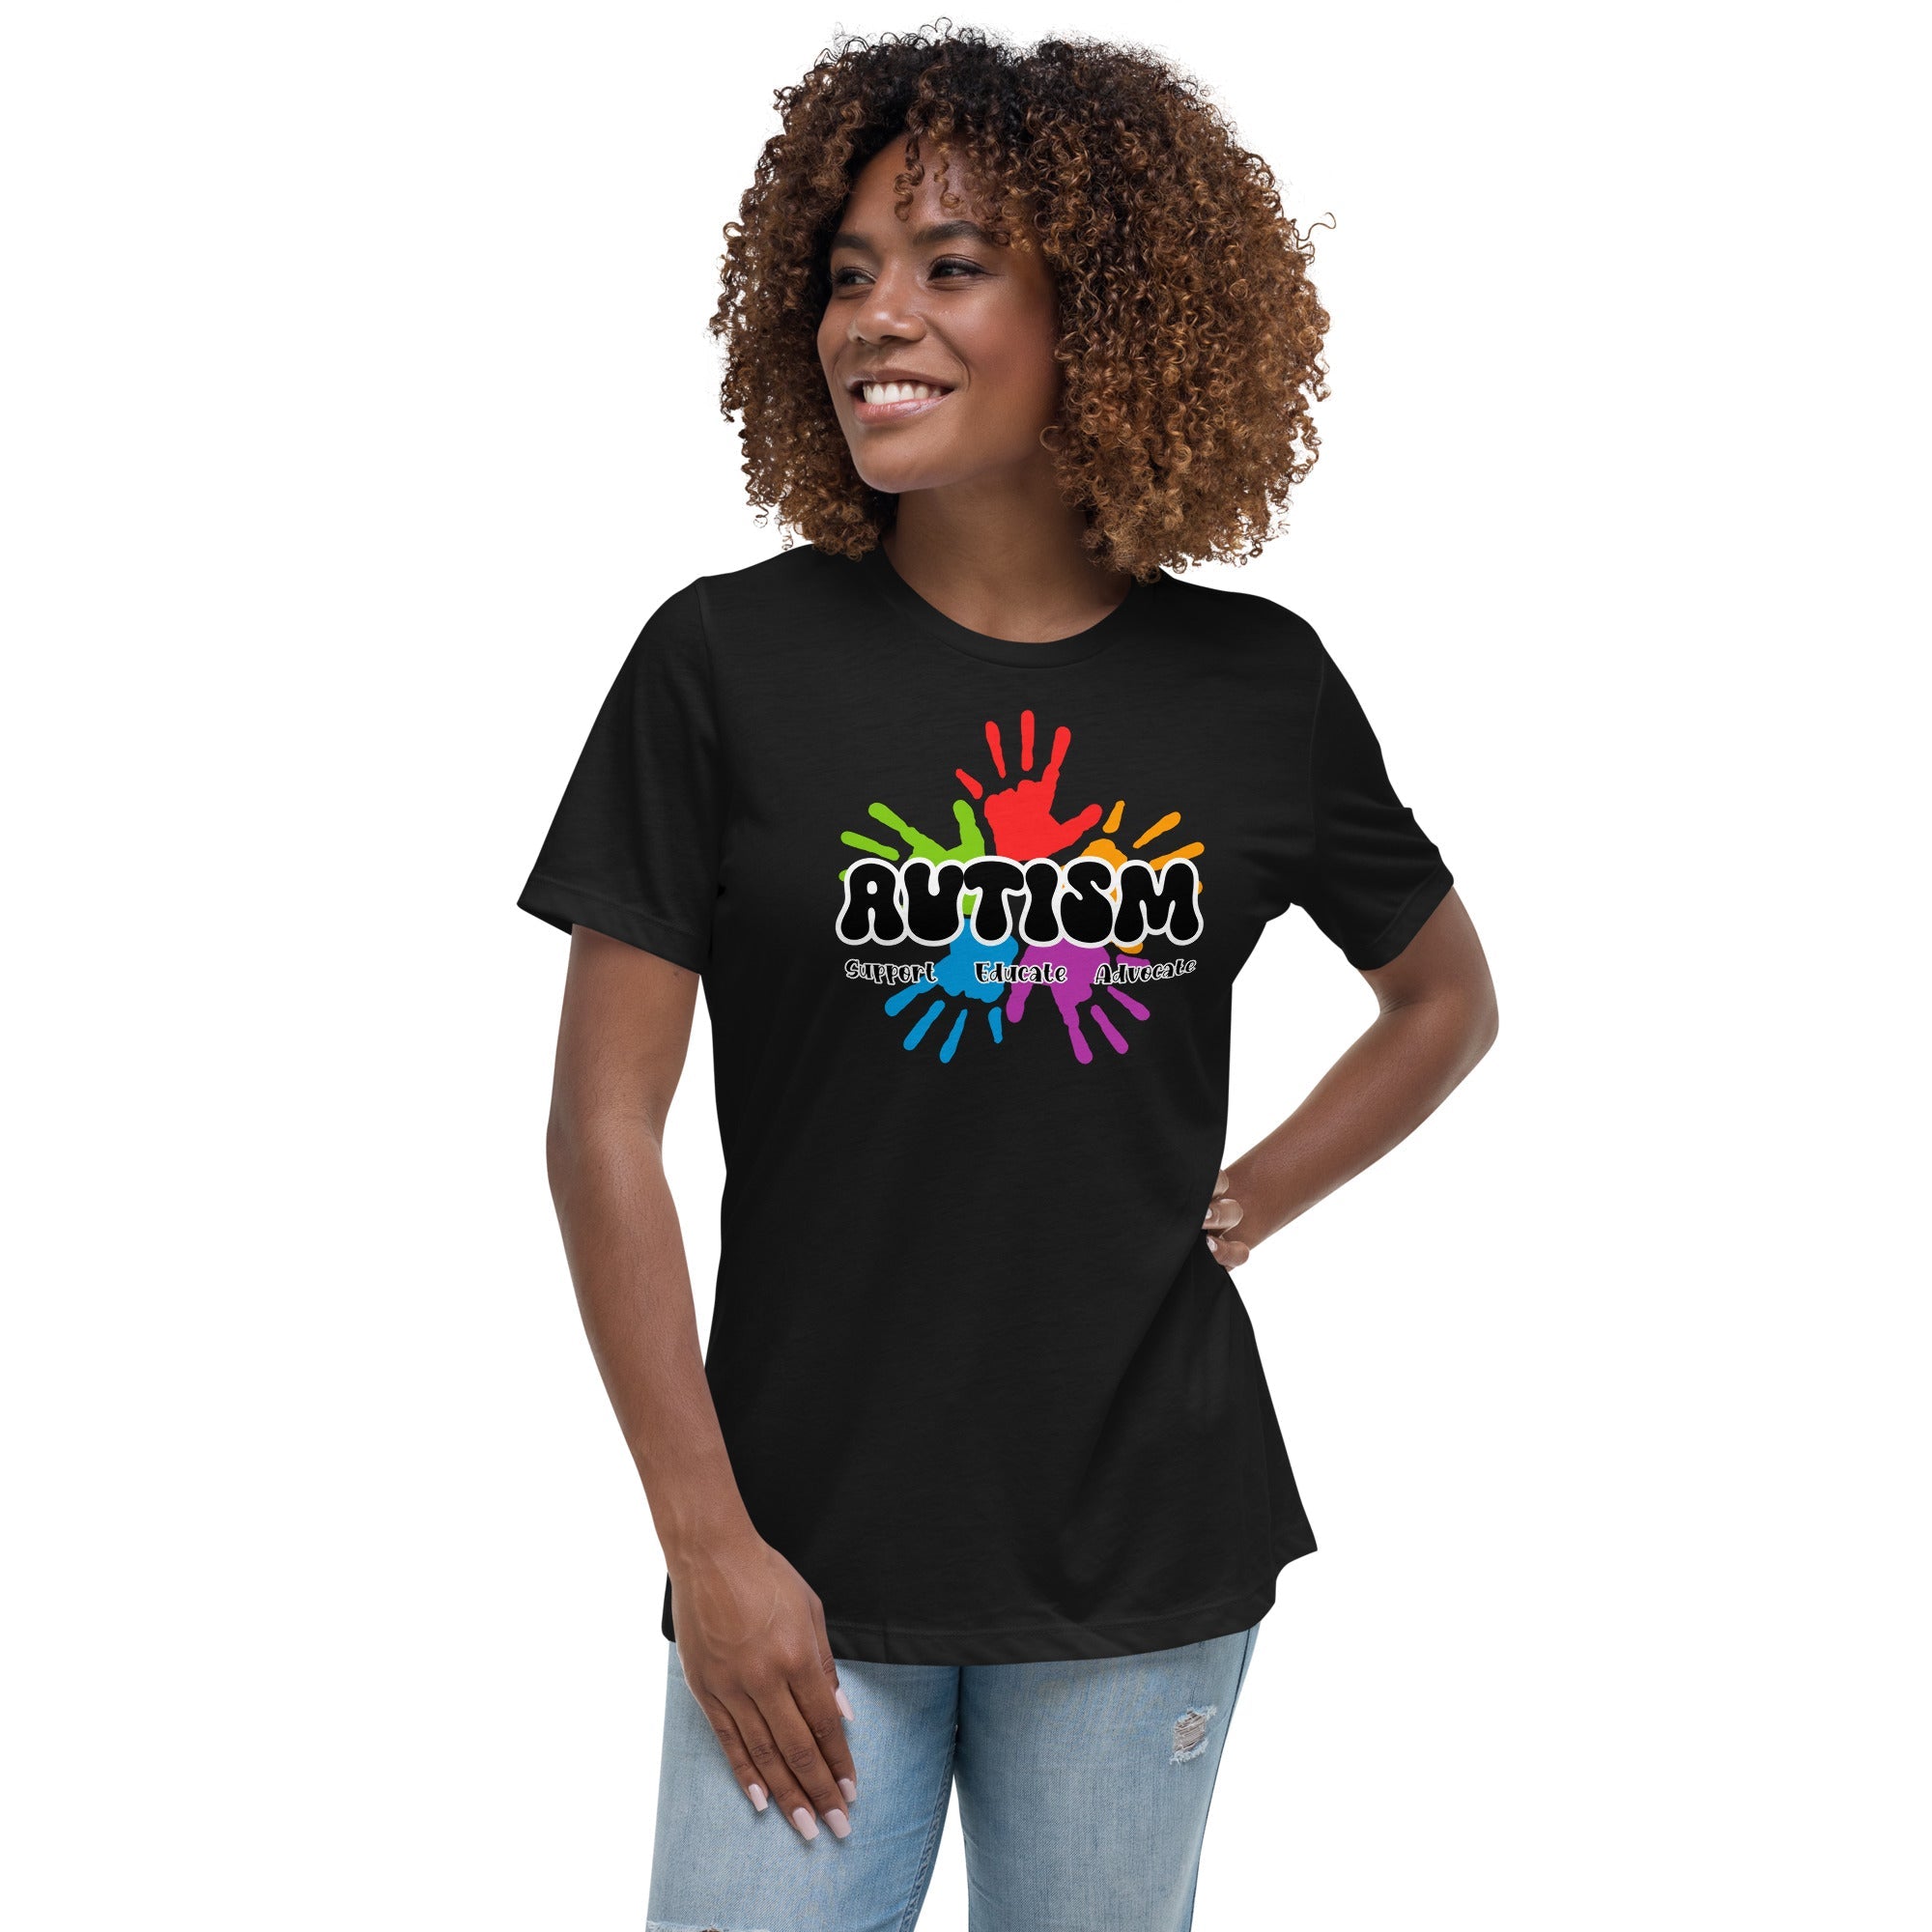 Women's Autism Hand Print Custom T-Shirt - Kicks Shoelaces